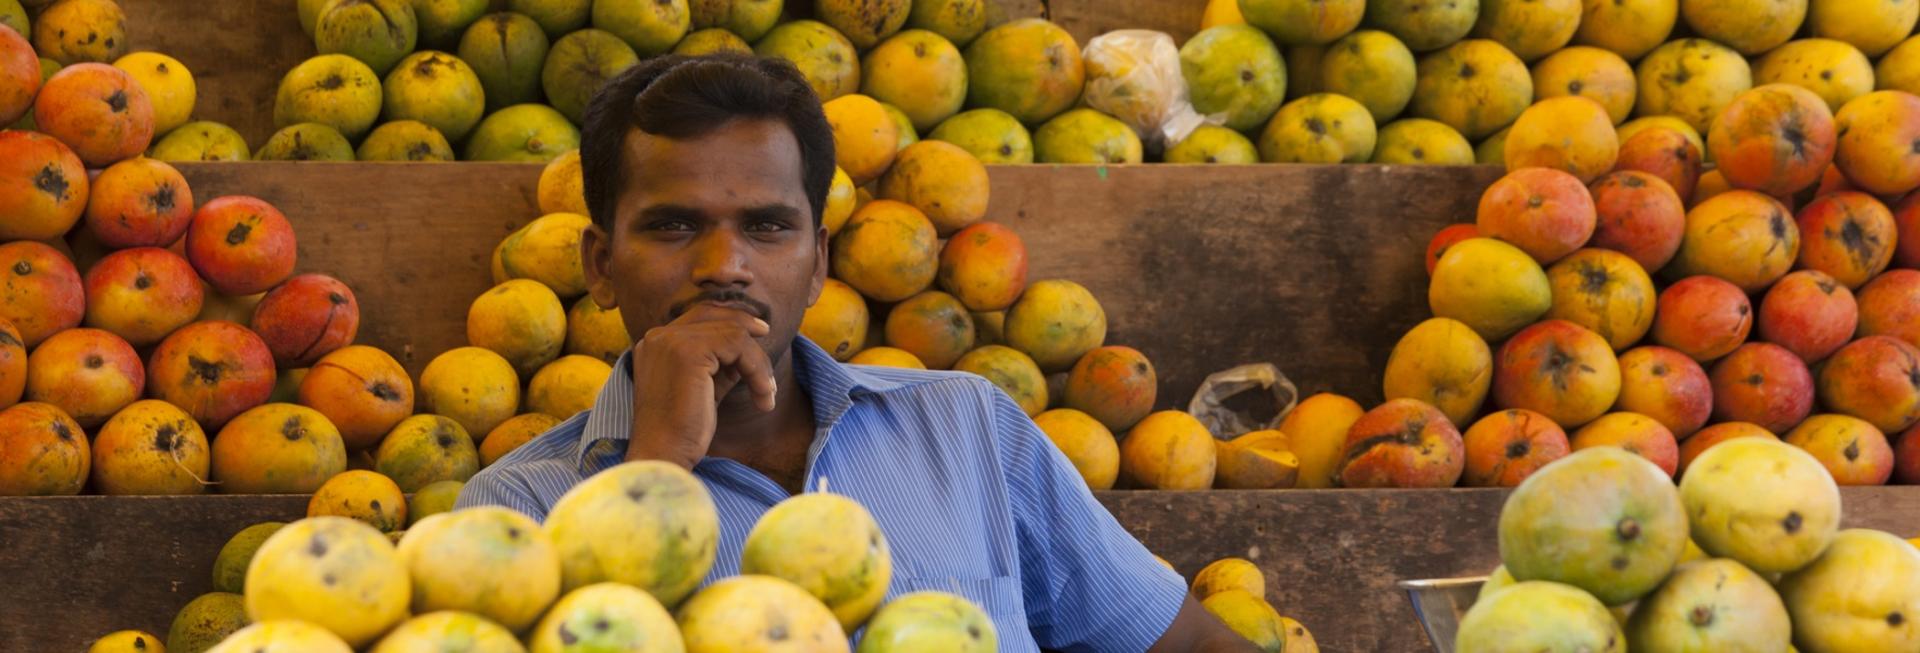 Fruit vendor, Coimbatore